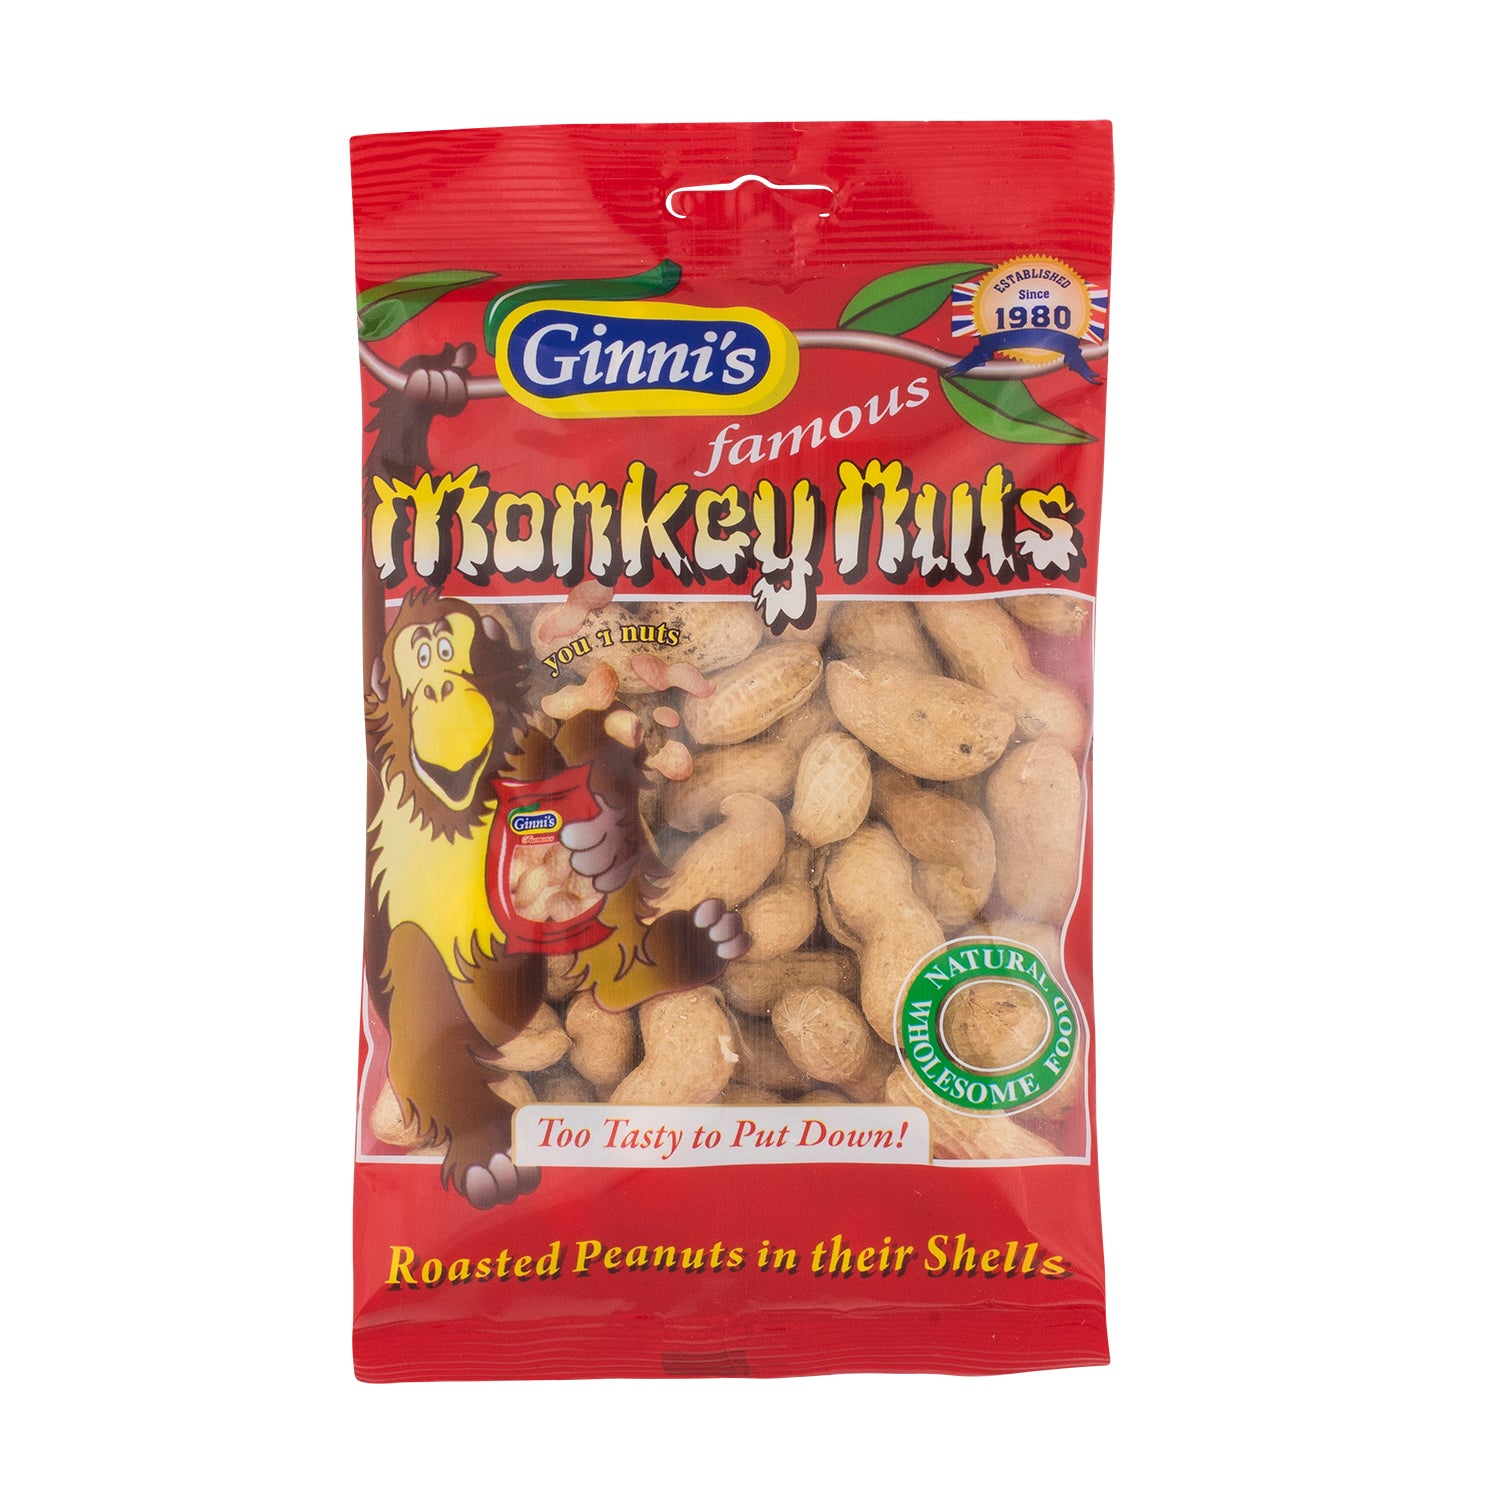 Ginnis Monkey nuts